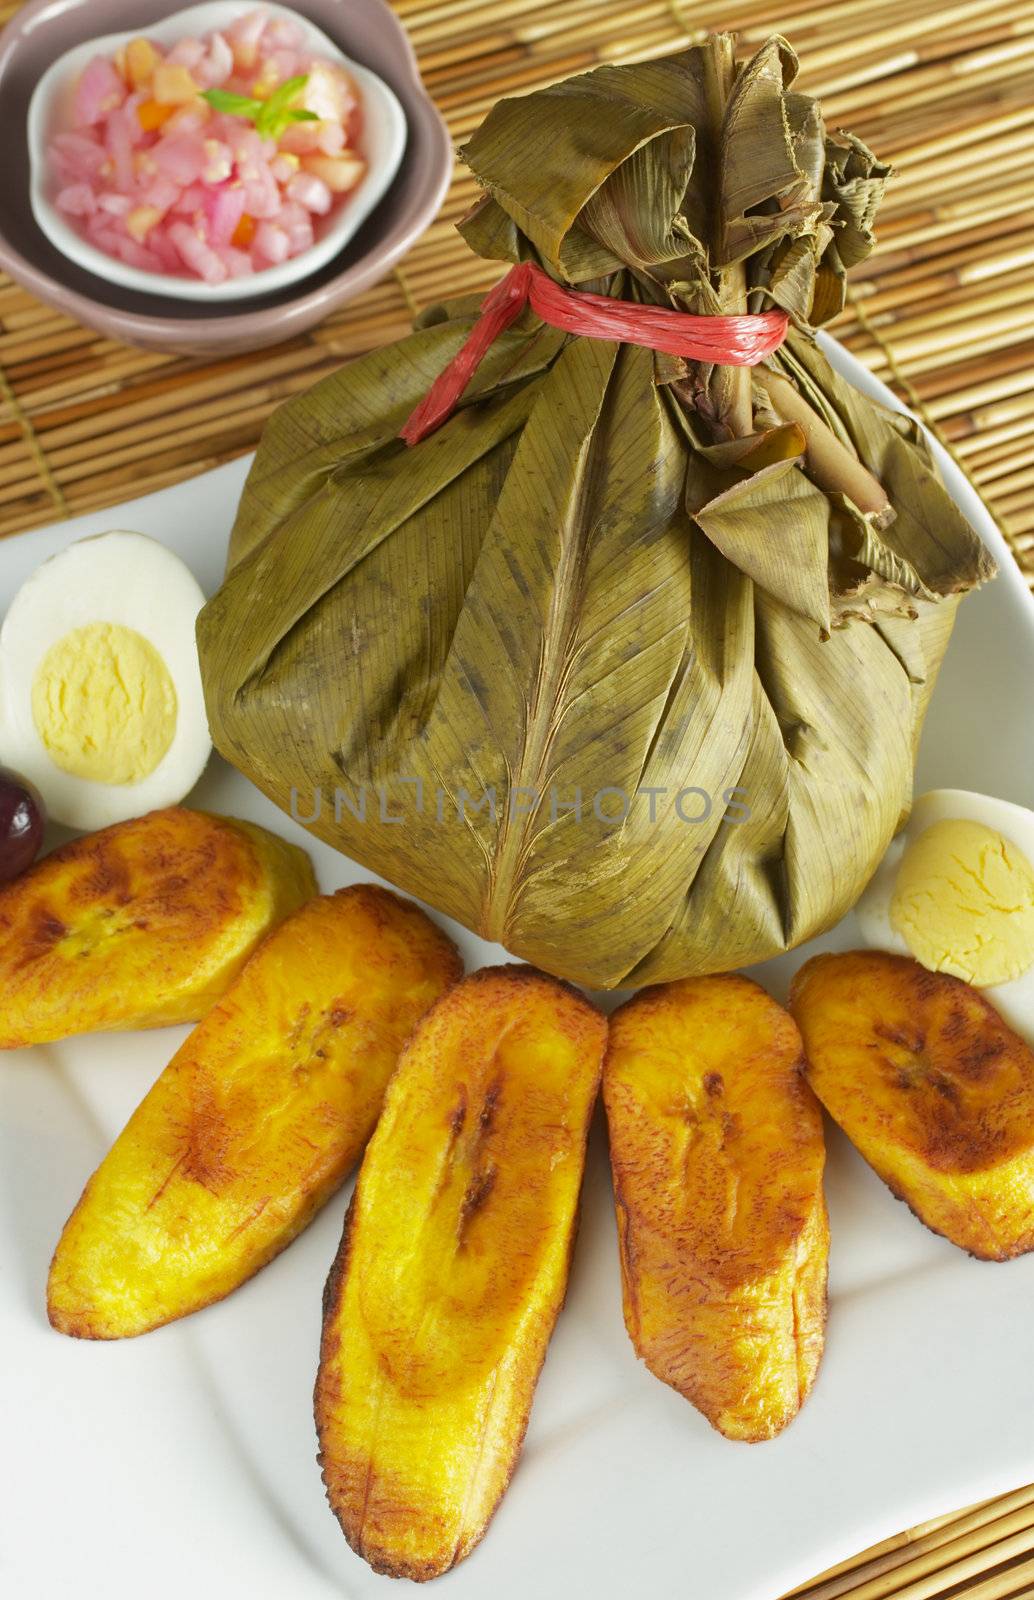 Traditional Peruvian Food Called Juane by ildi